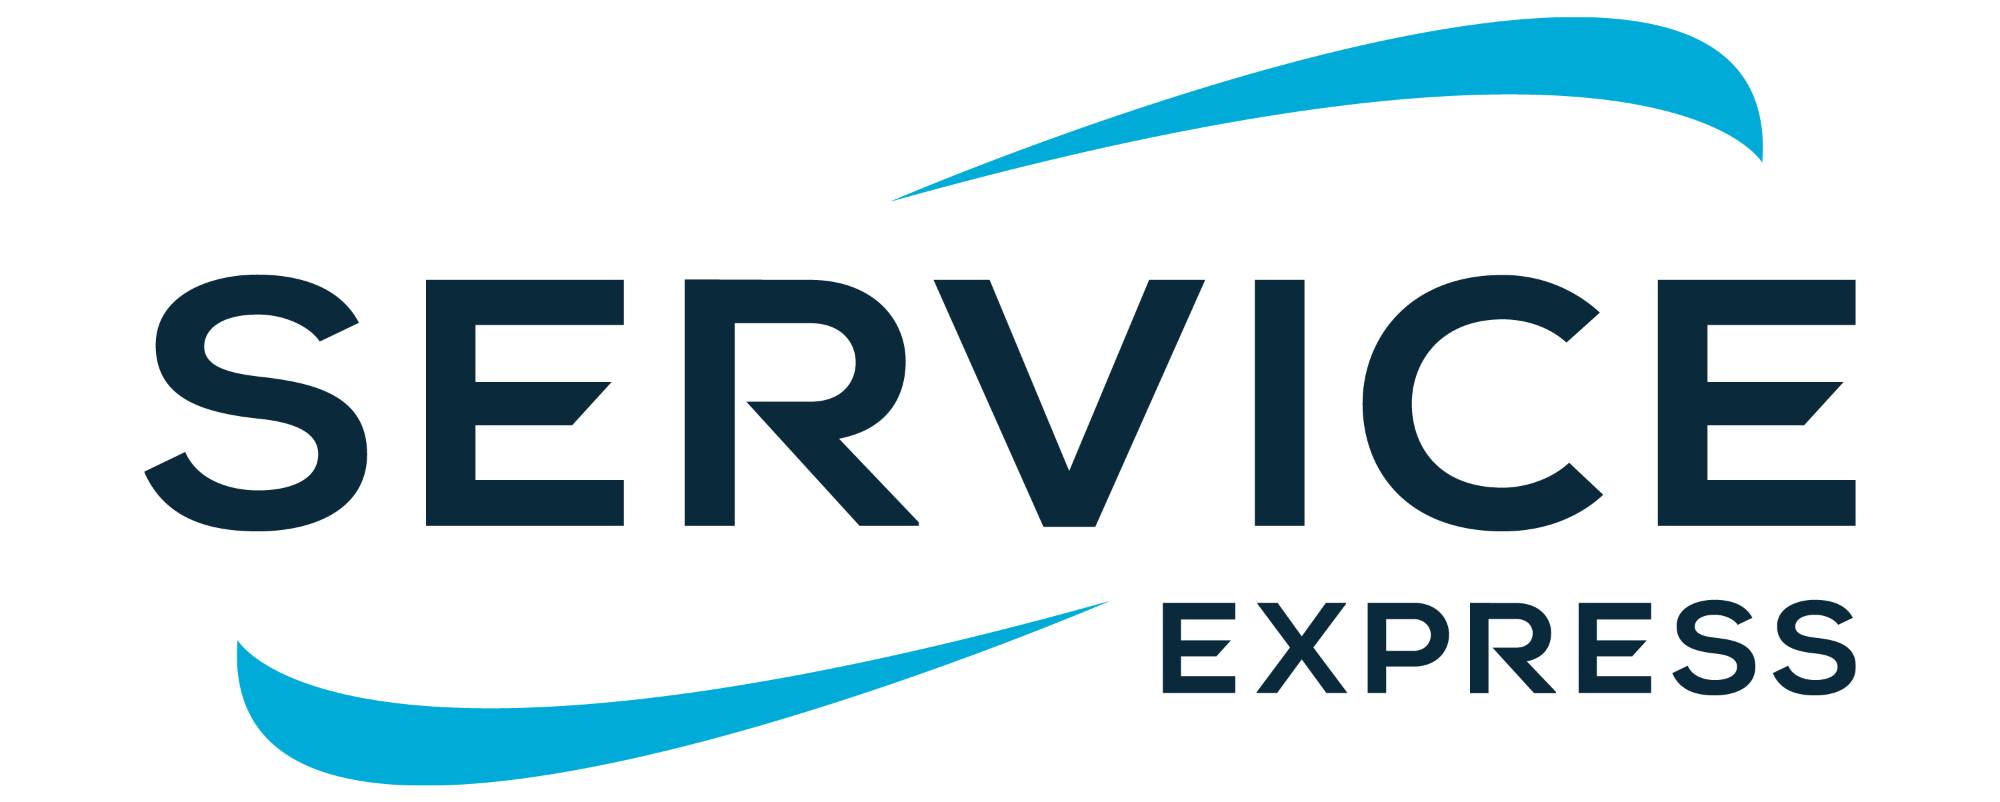 Service Express logo